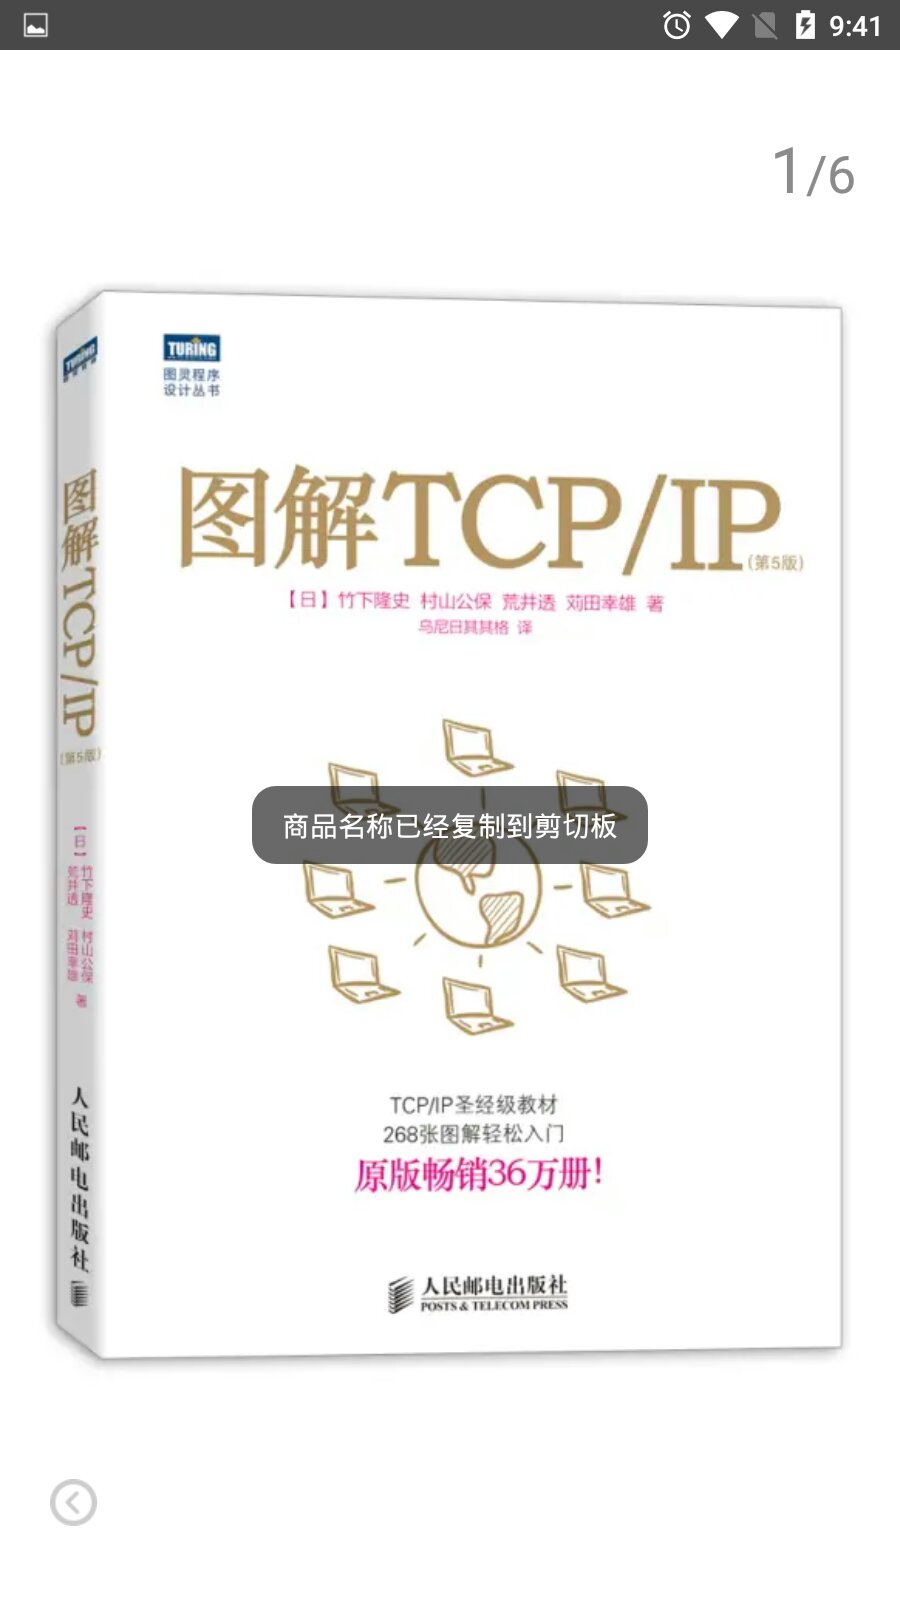 图解TCP/IP 第5版图解TCP/IP 第5版图解TCP/IP 第5版图解TCP/IP 第5版图解TCP/IP 第5版图解TCP/IP 第5版图解TCP/IP 第5版图解TCP/IP 第5版图解TCP/IP 第5版